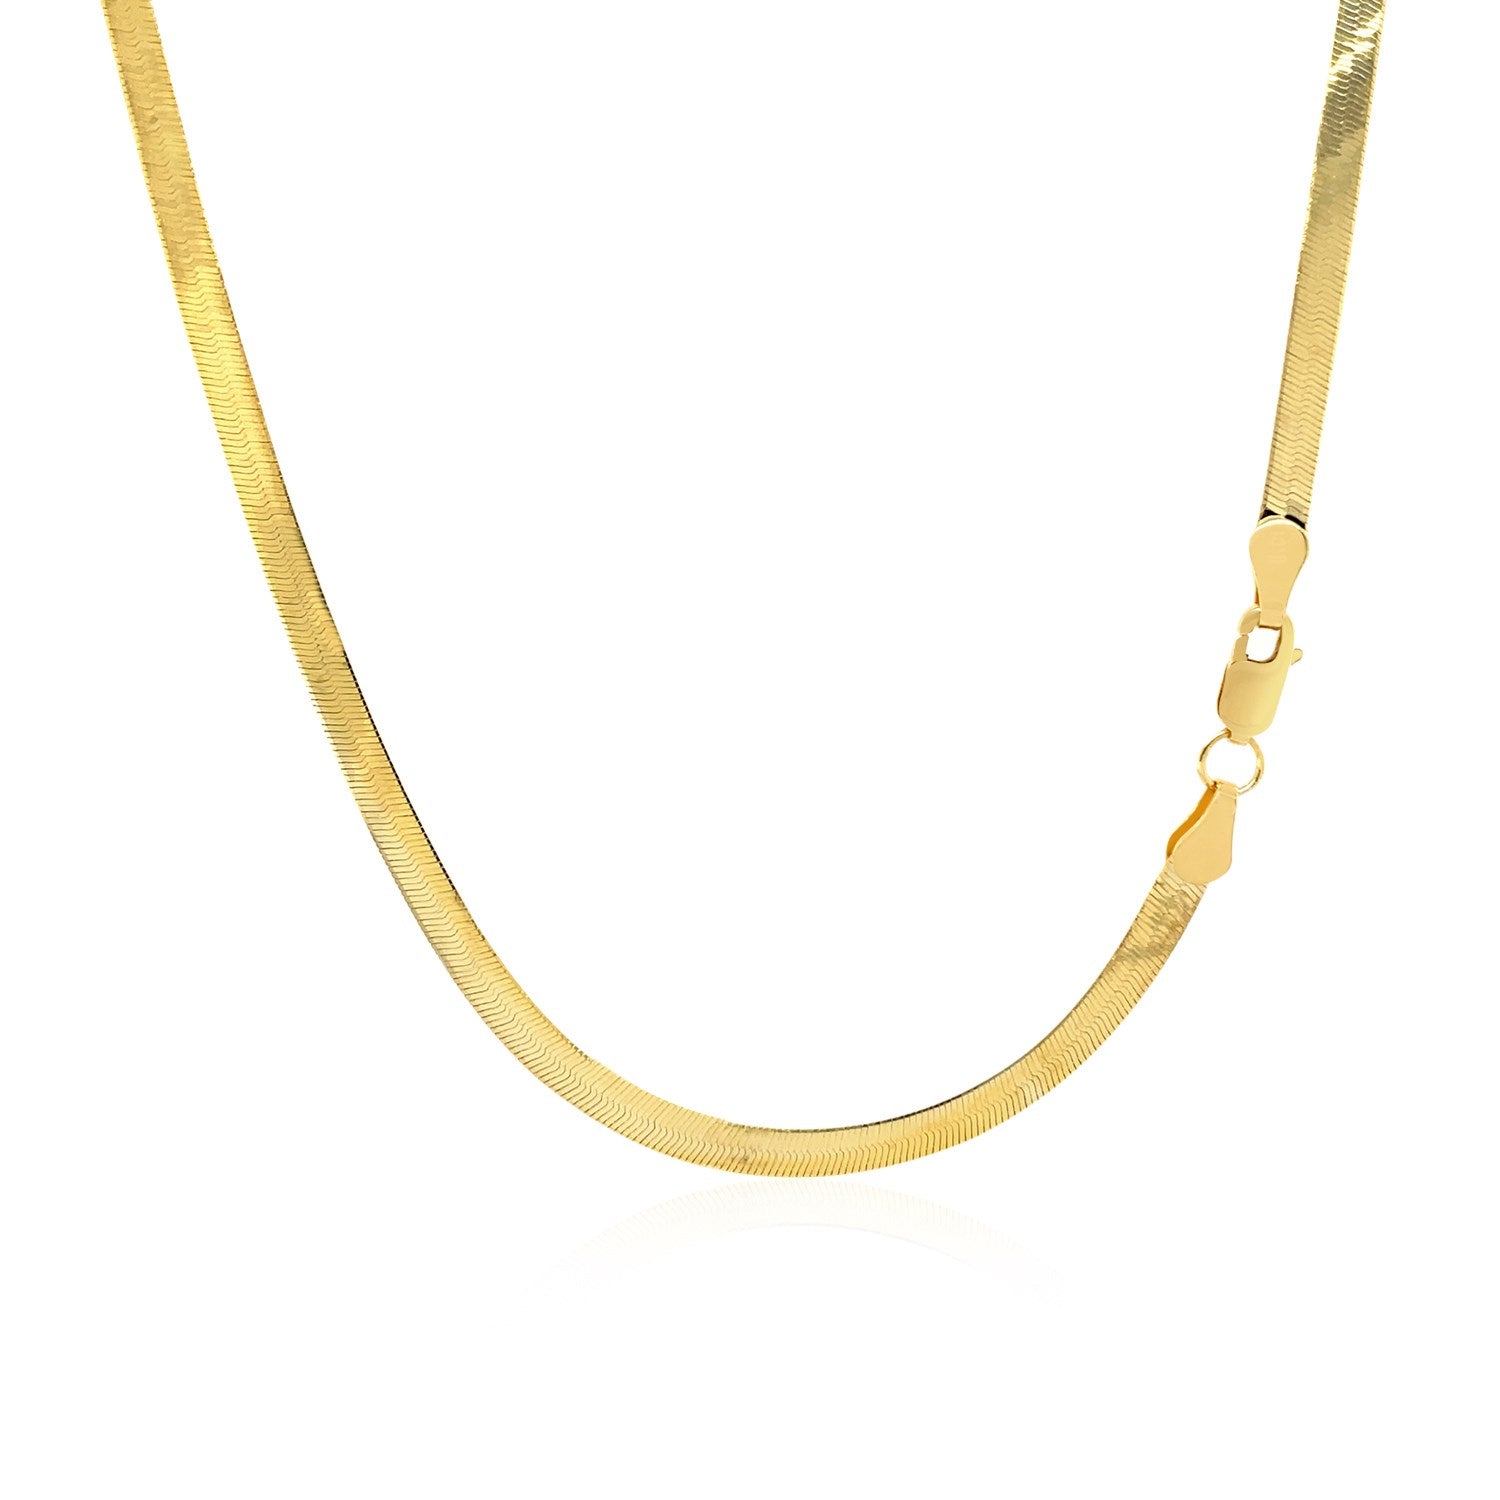 3 0Mm 14K Yellow Gold Super Flex Herringbone Chain 41993-4